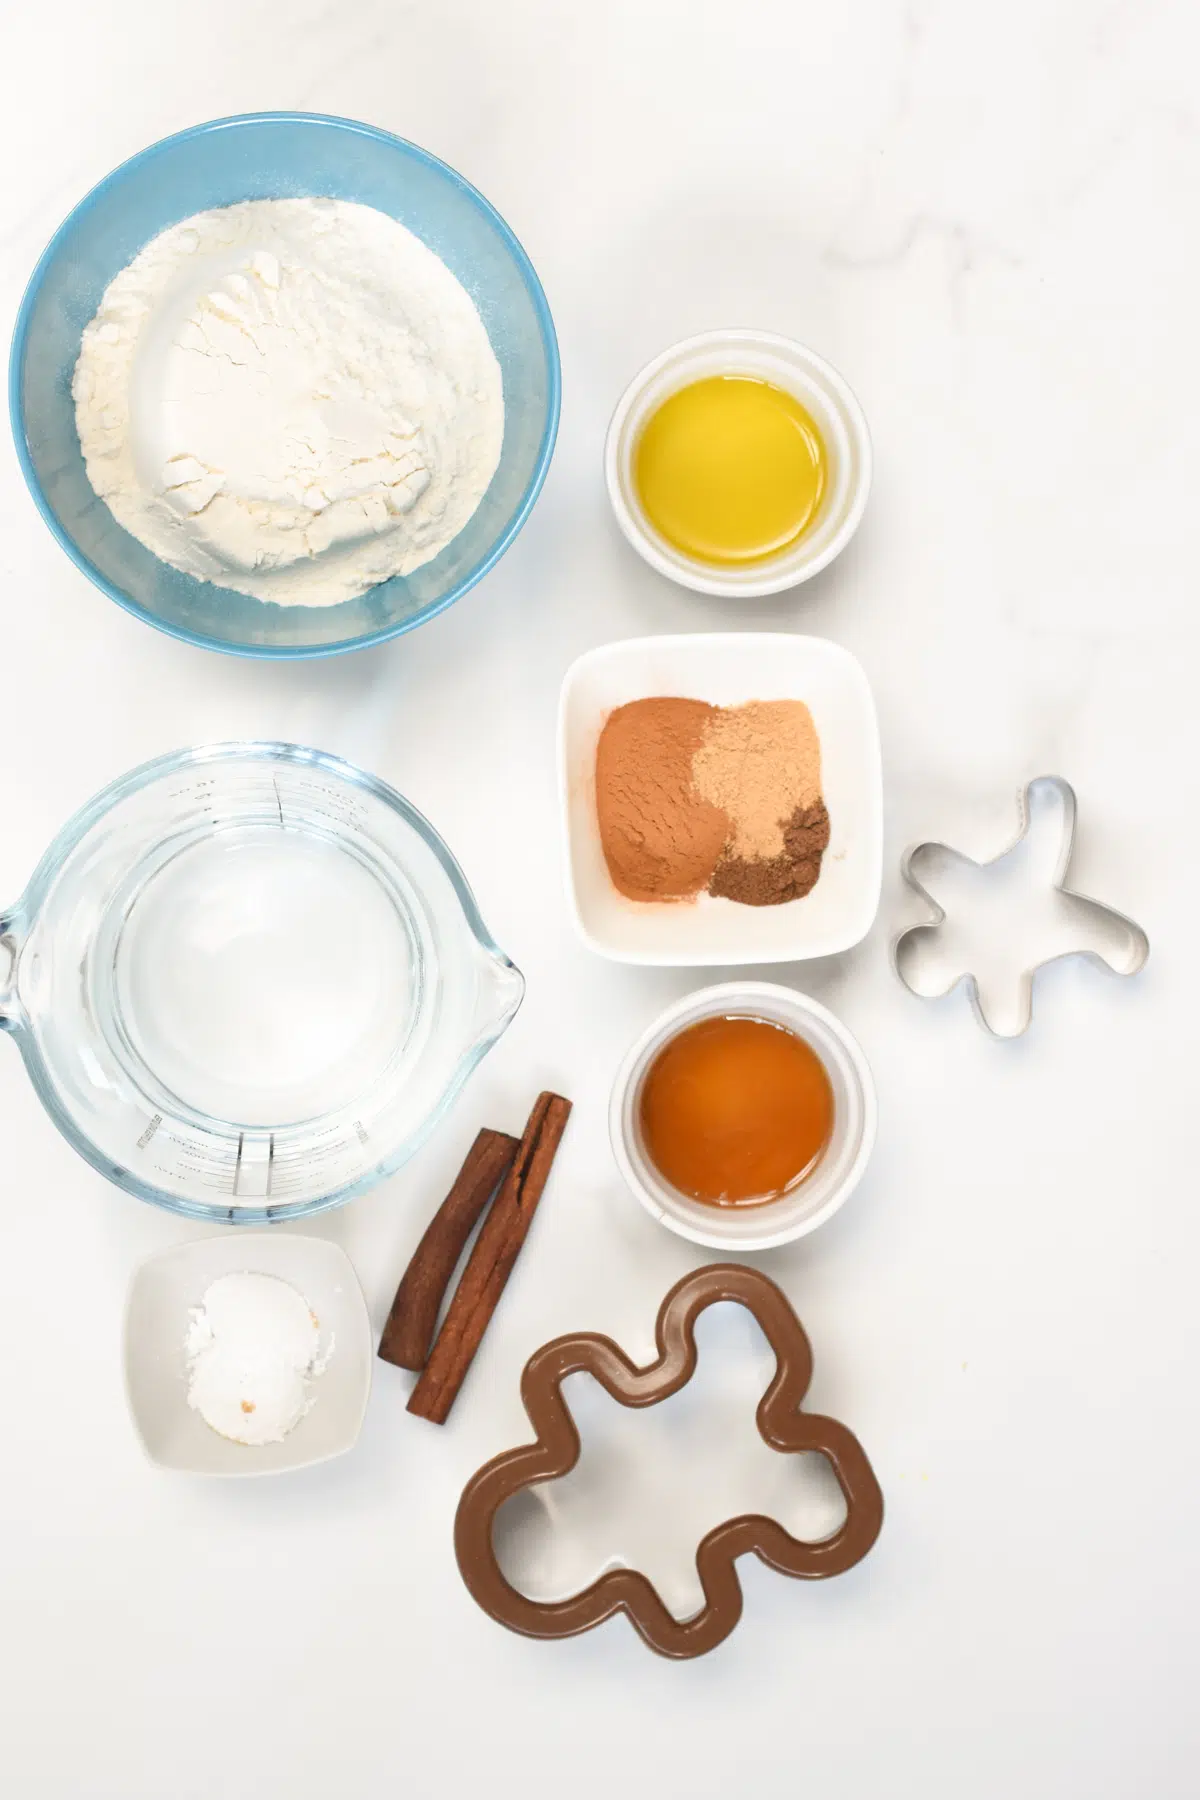 Gingerbread playdough ingredients